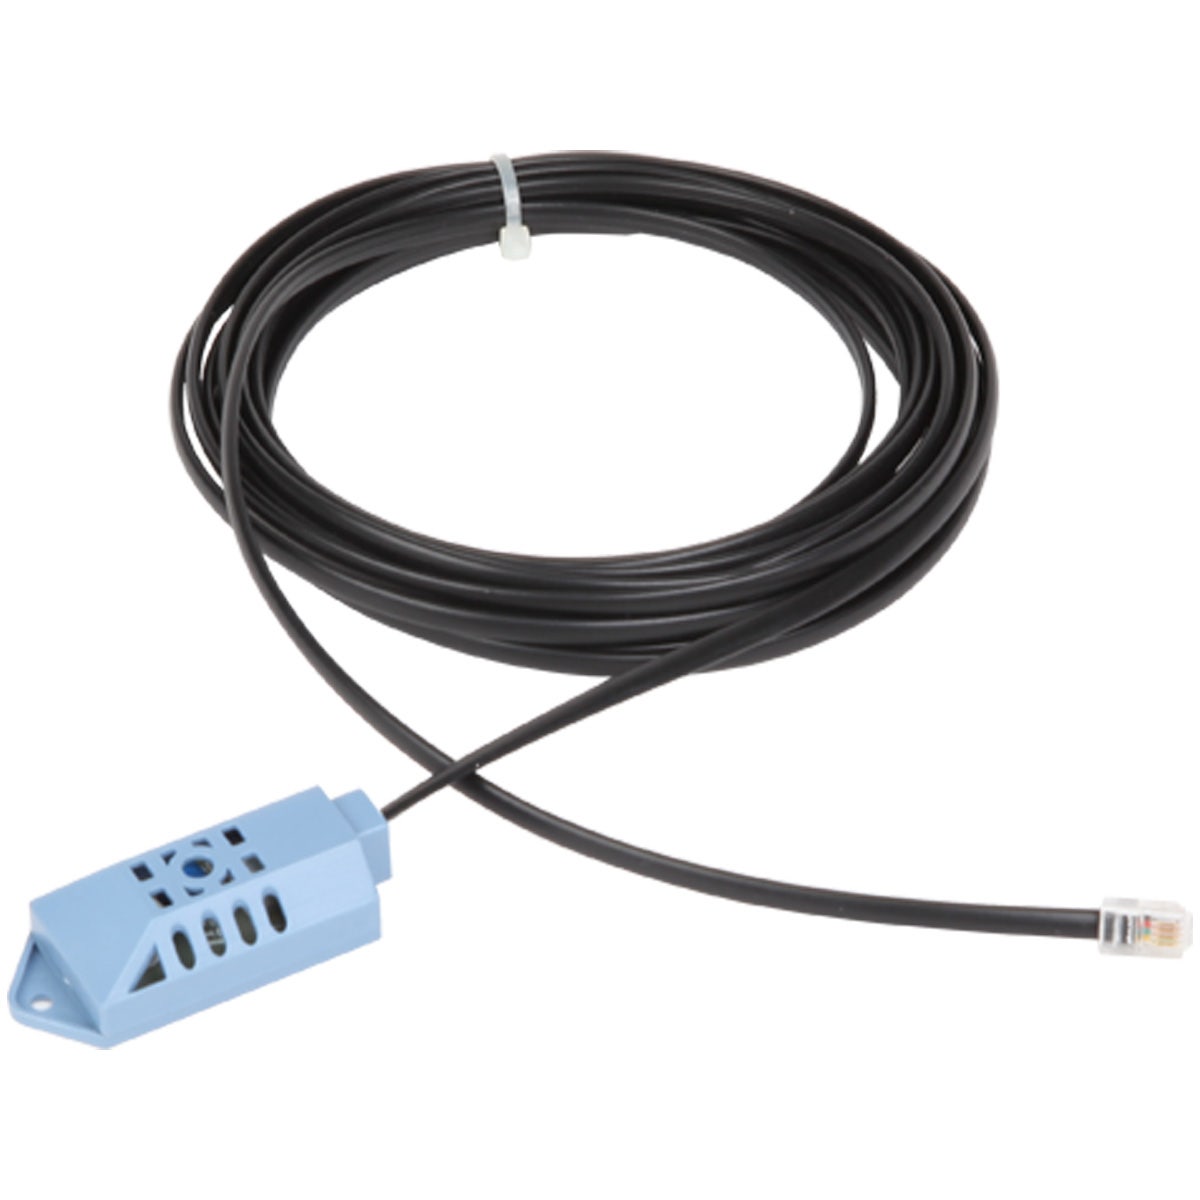 Dimlux Humidity Sensor Cable
